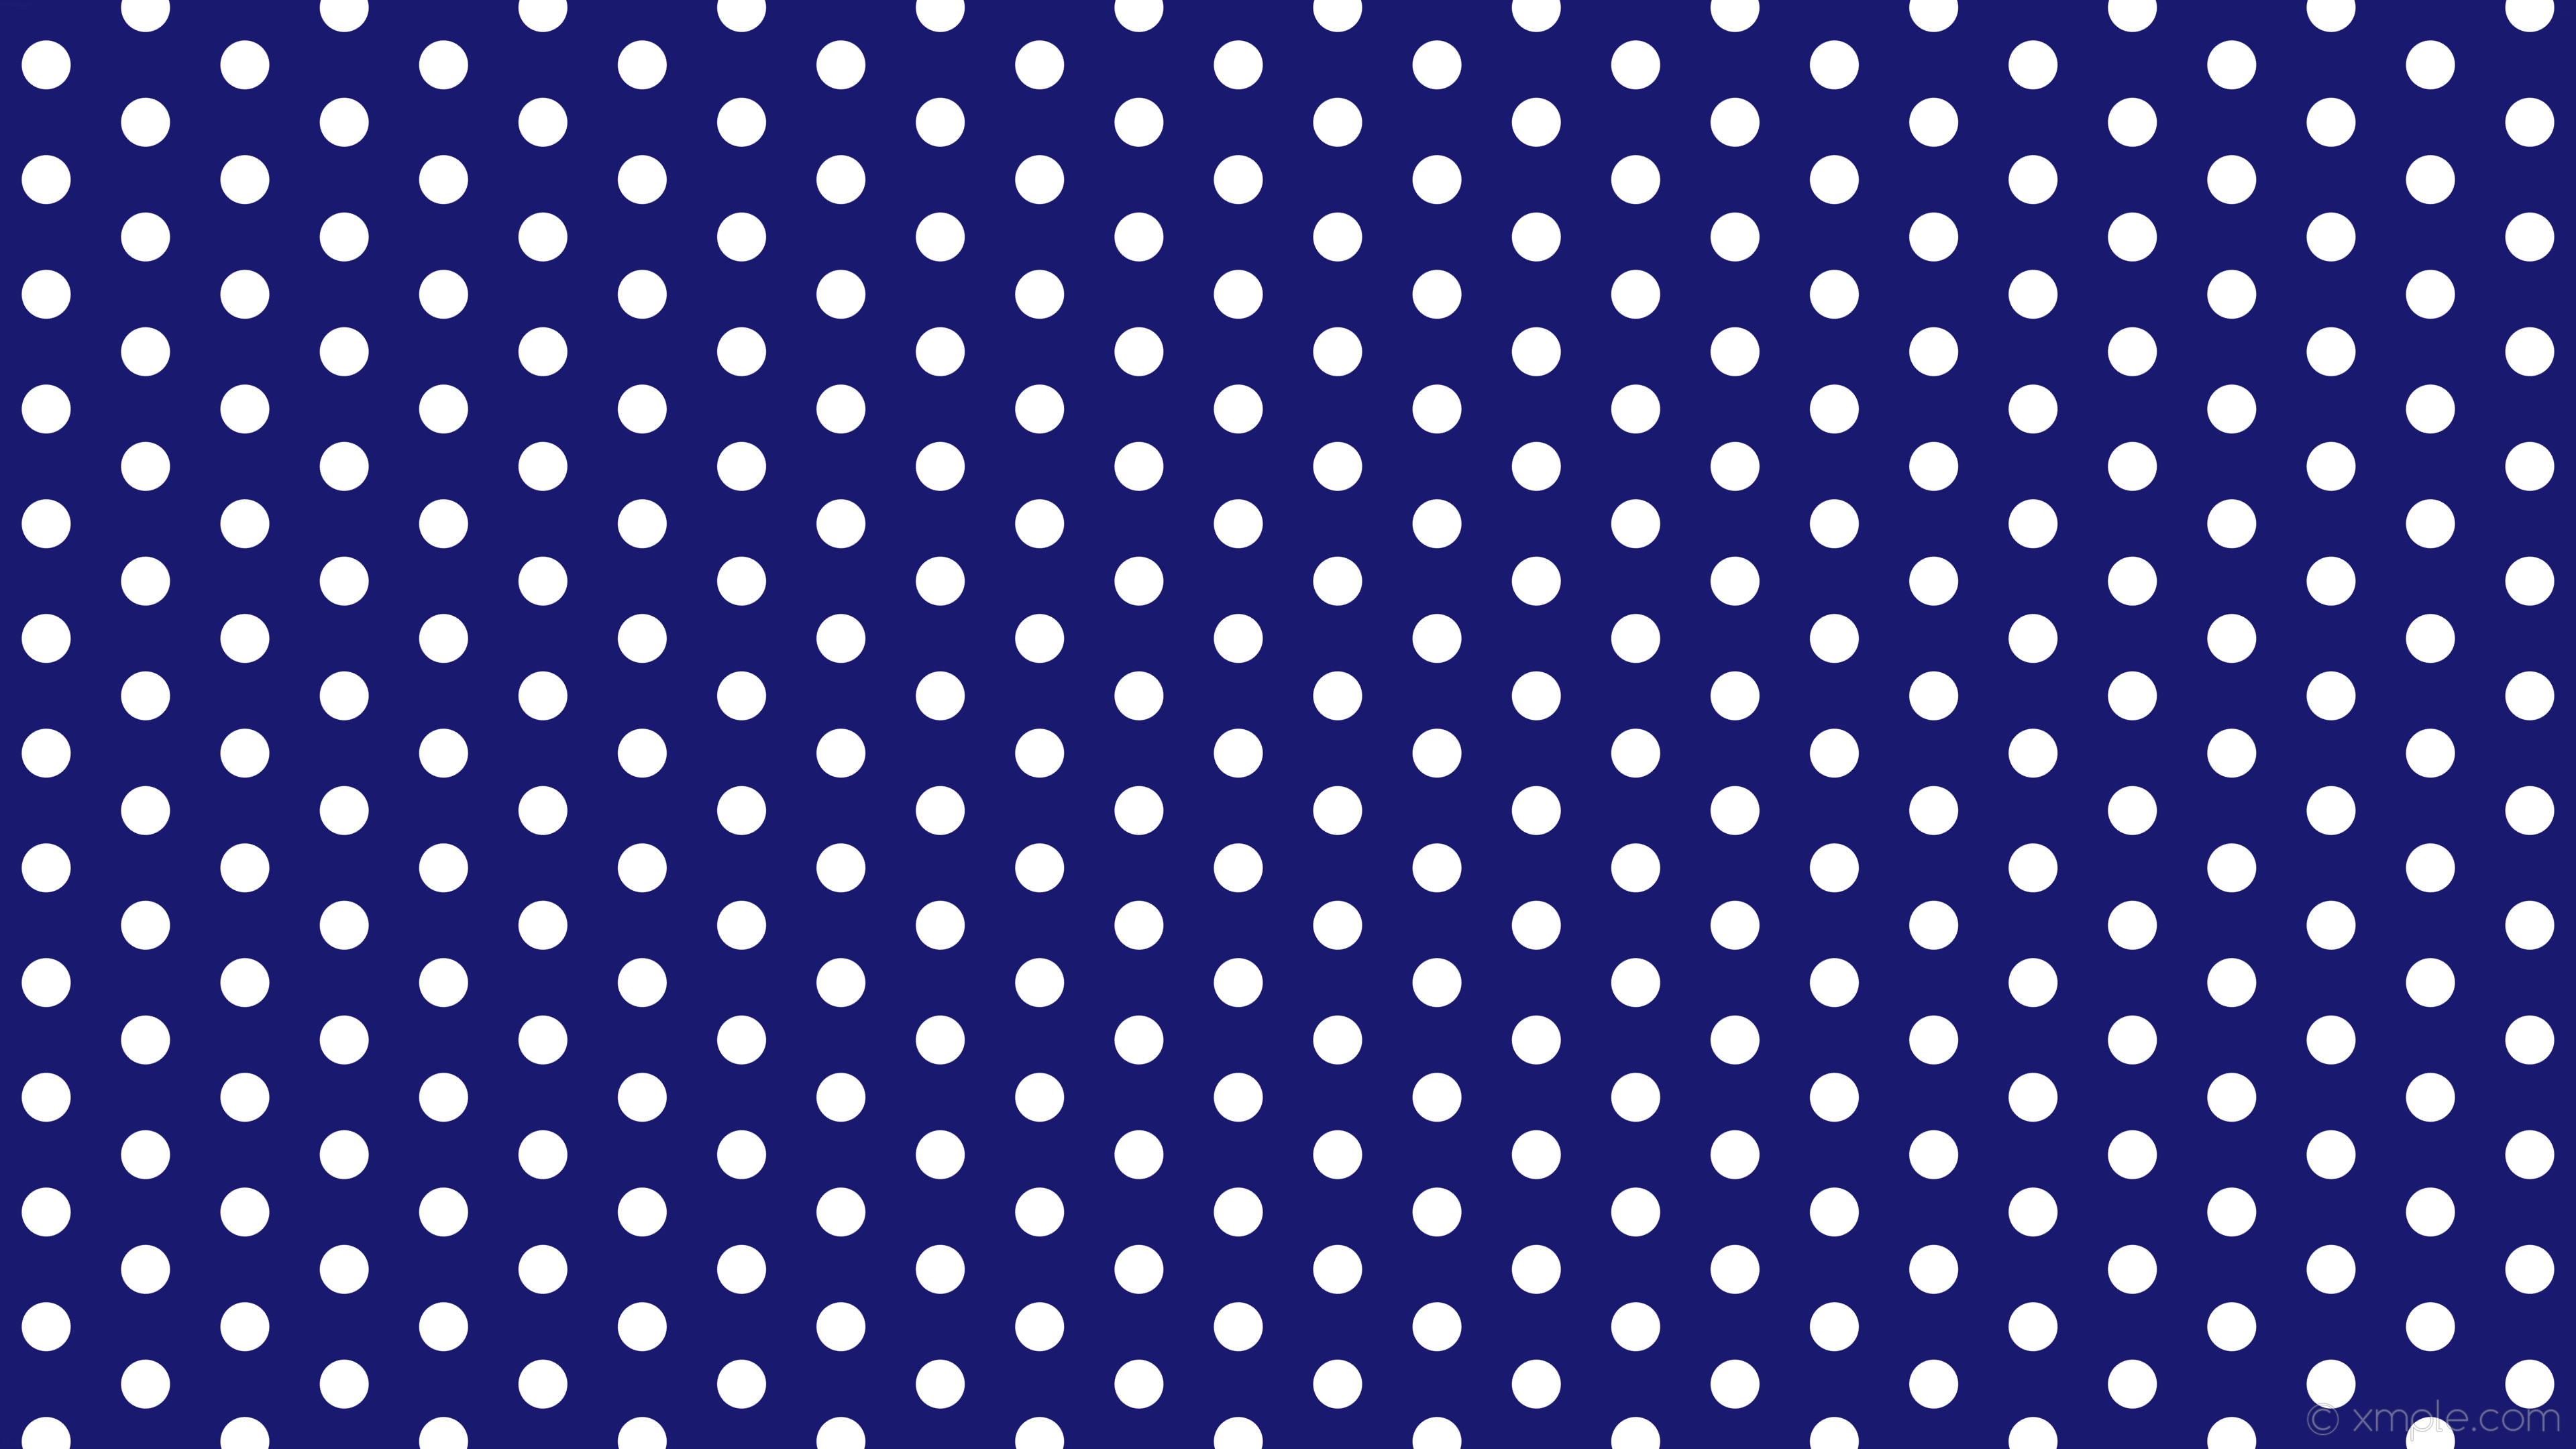 Dark blue and white polka dot nails - wide 5